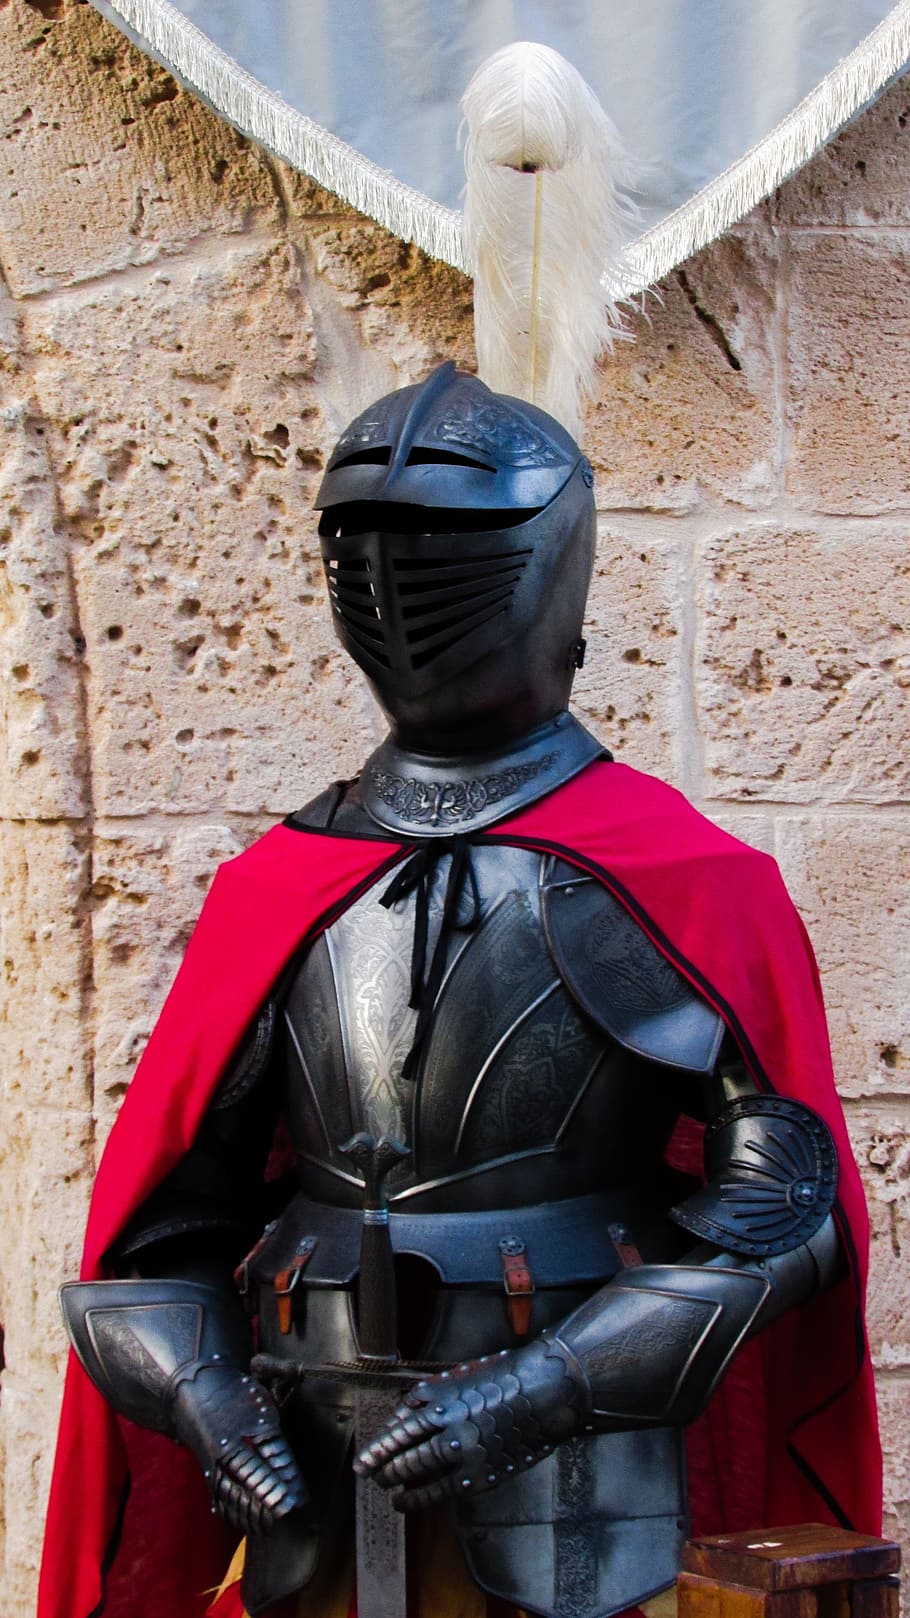 Armor, Medieval, Metal, Helmet, protection, sword, military, suit, vintage, metallic